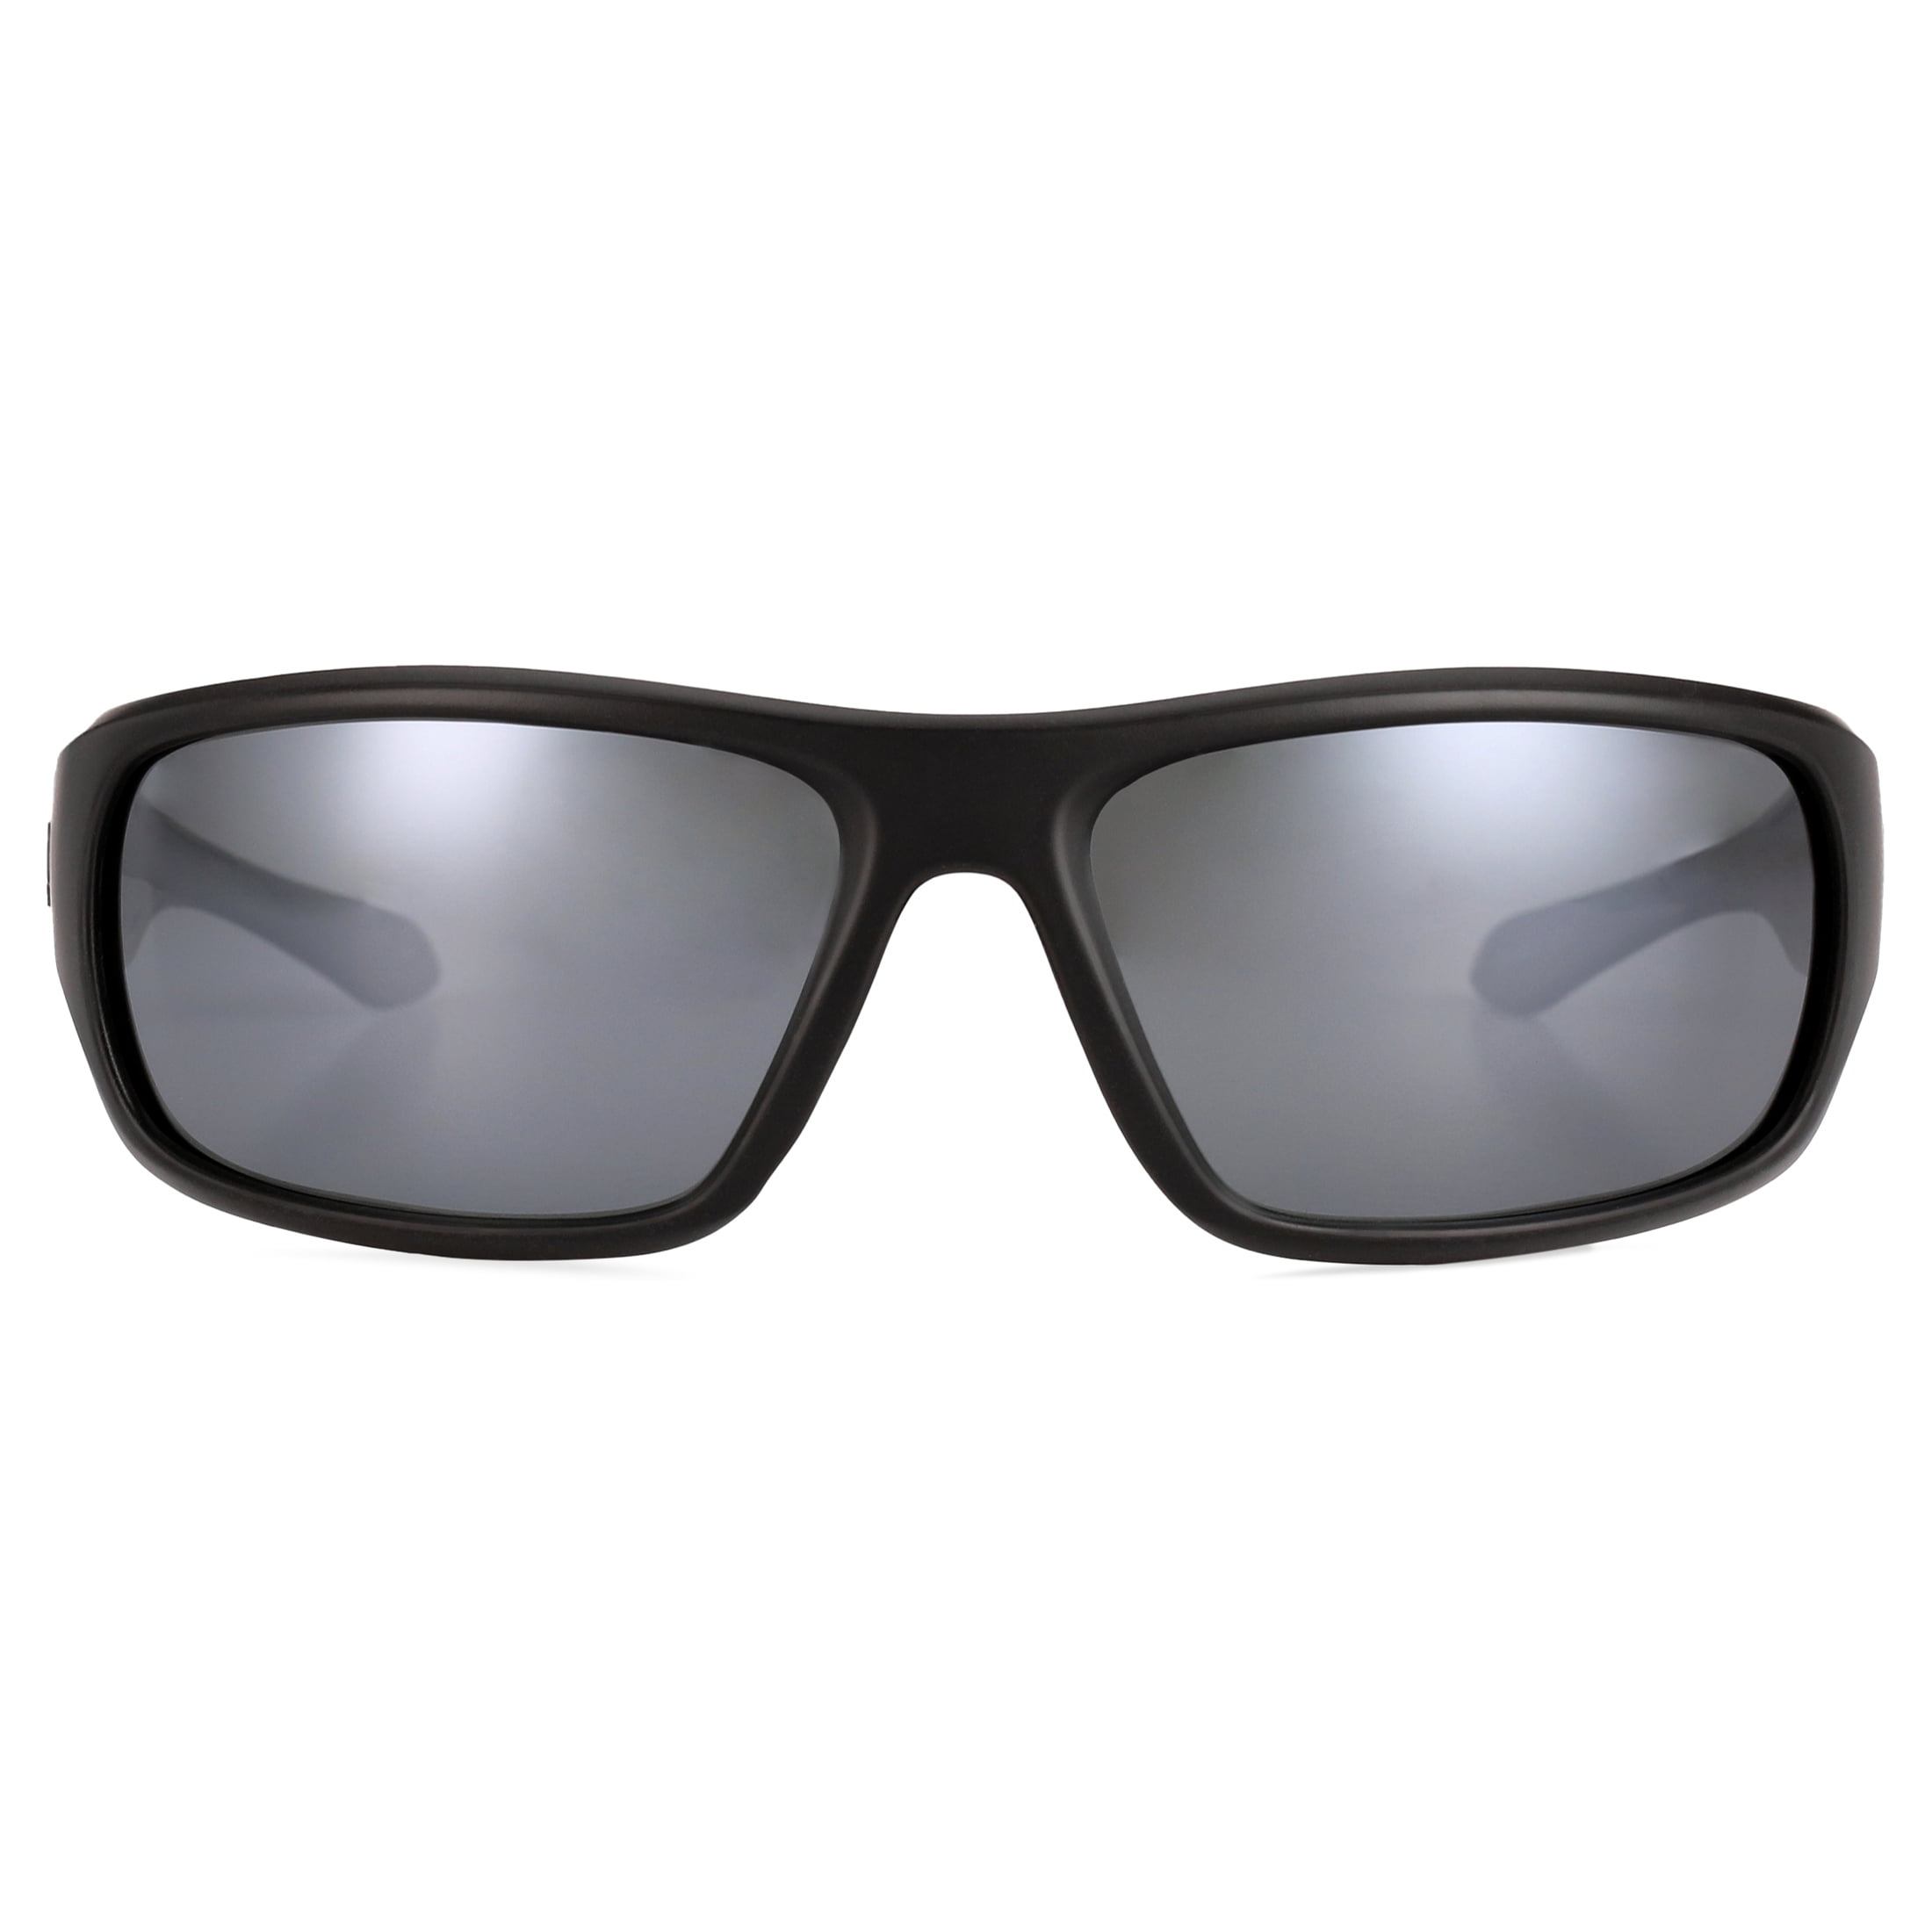 PRX Mens Sunglasses, Jetty Black - Walmart.com